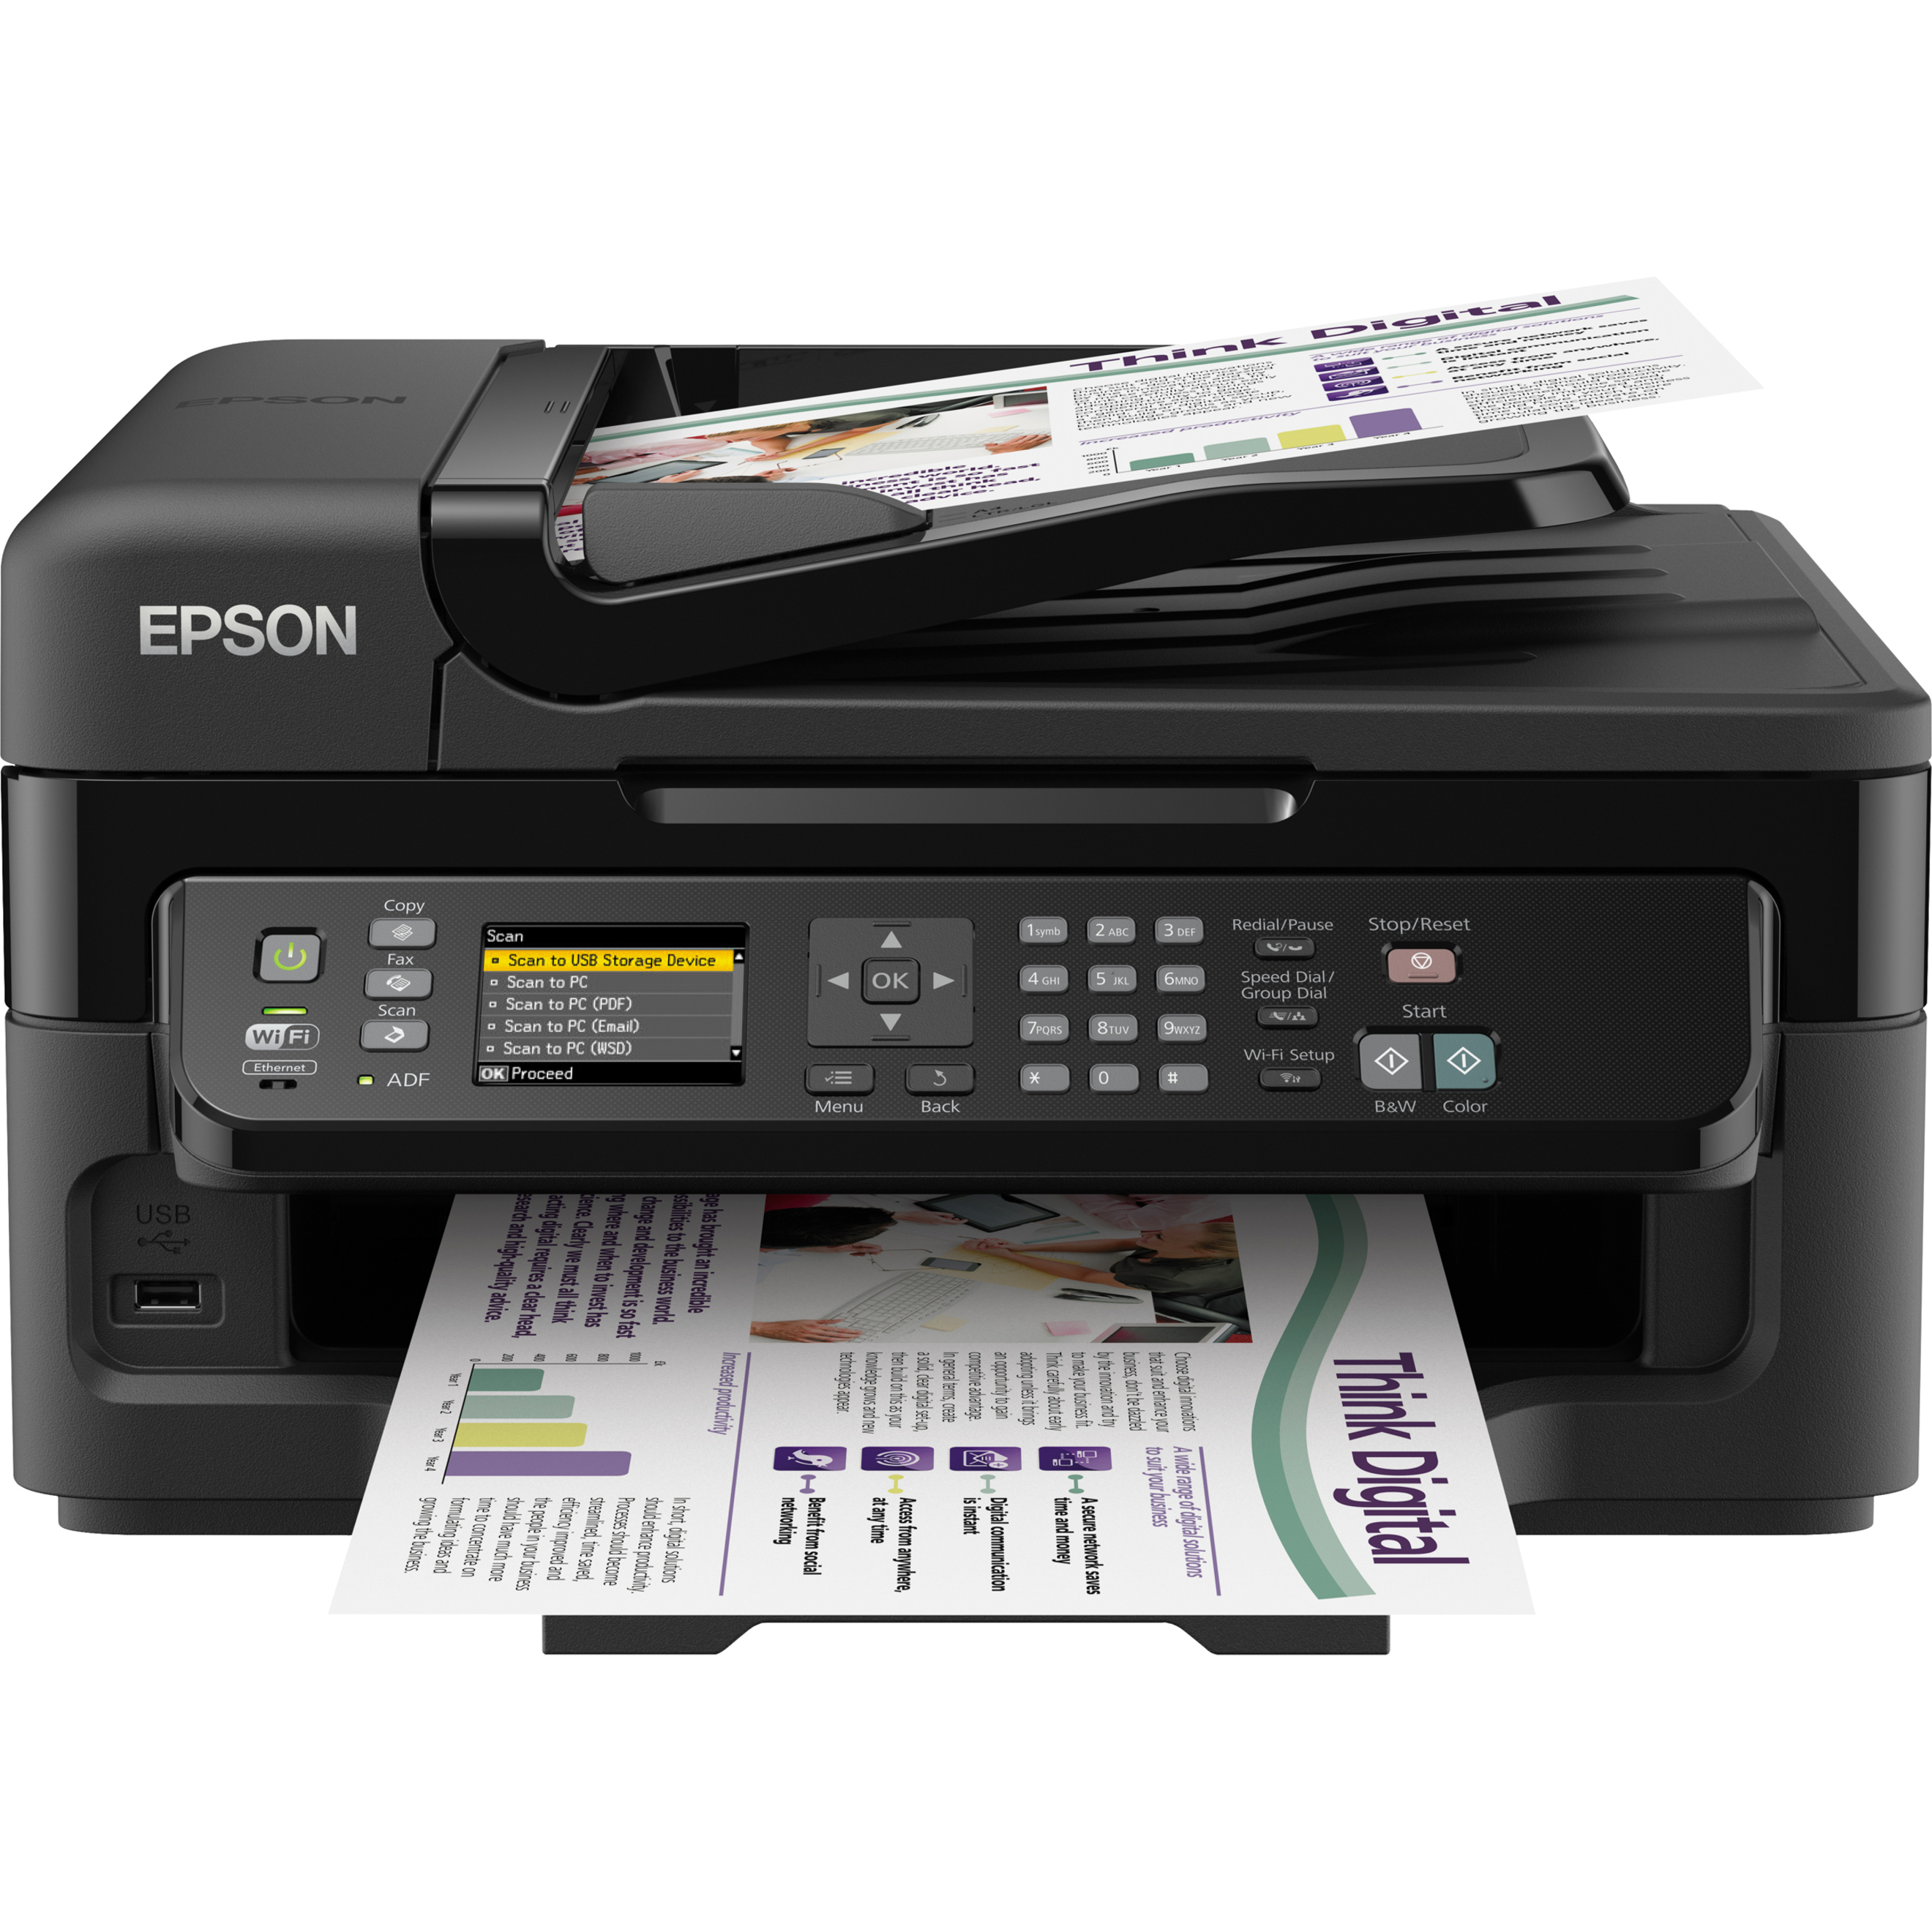 Epson WorkForce WF-2540 Wireless Inkjet Multifunction Printer, Color - image 1 of 4